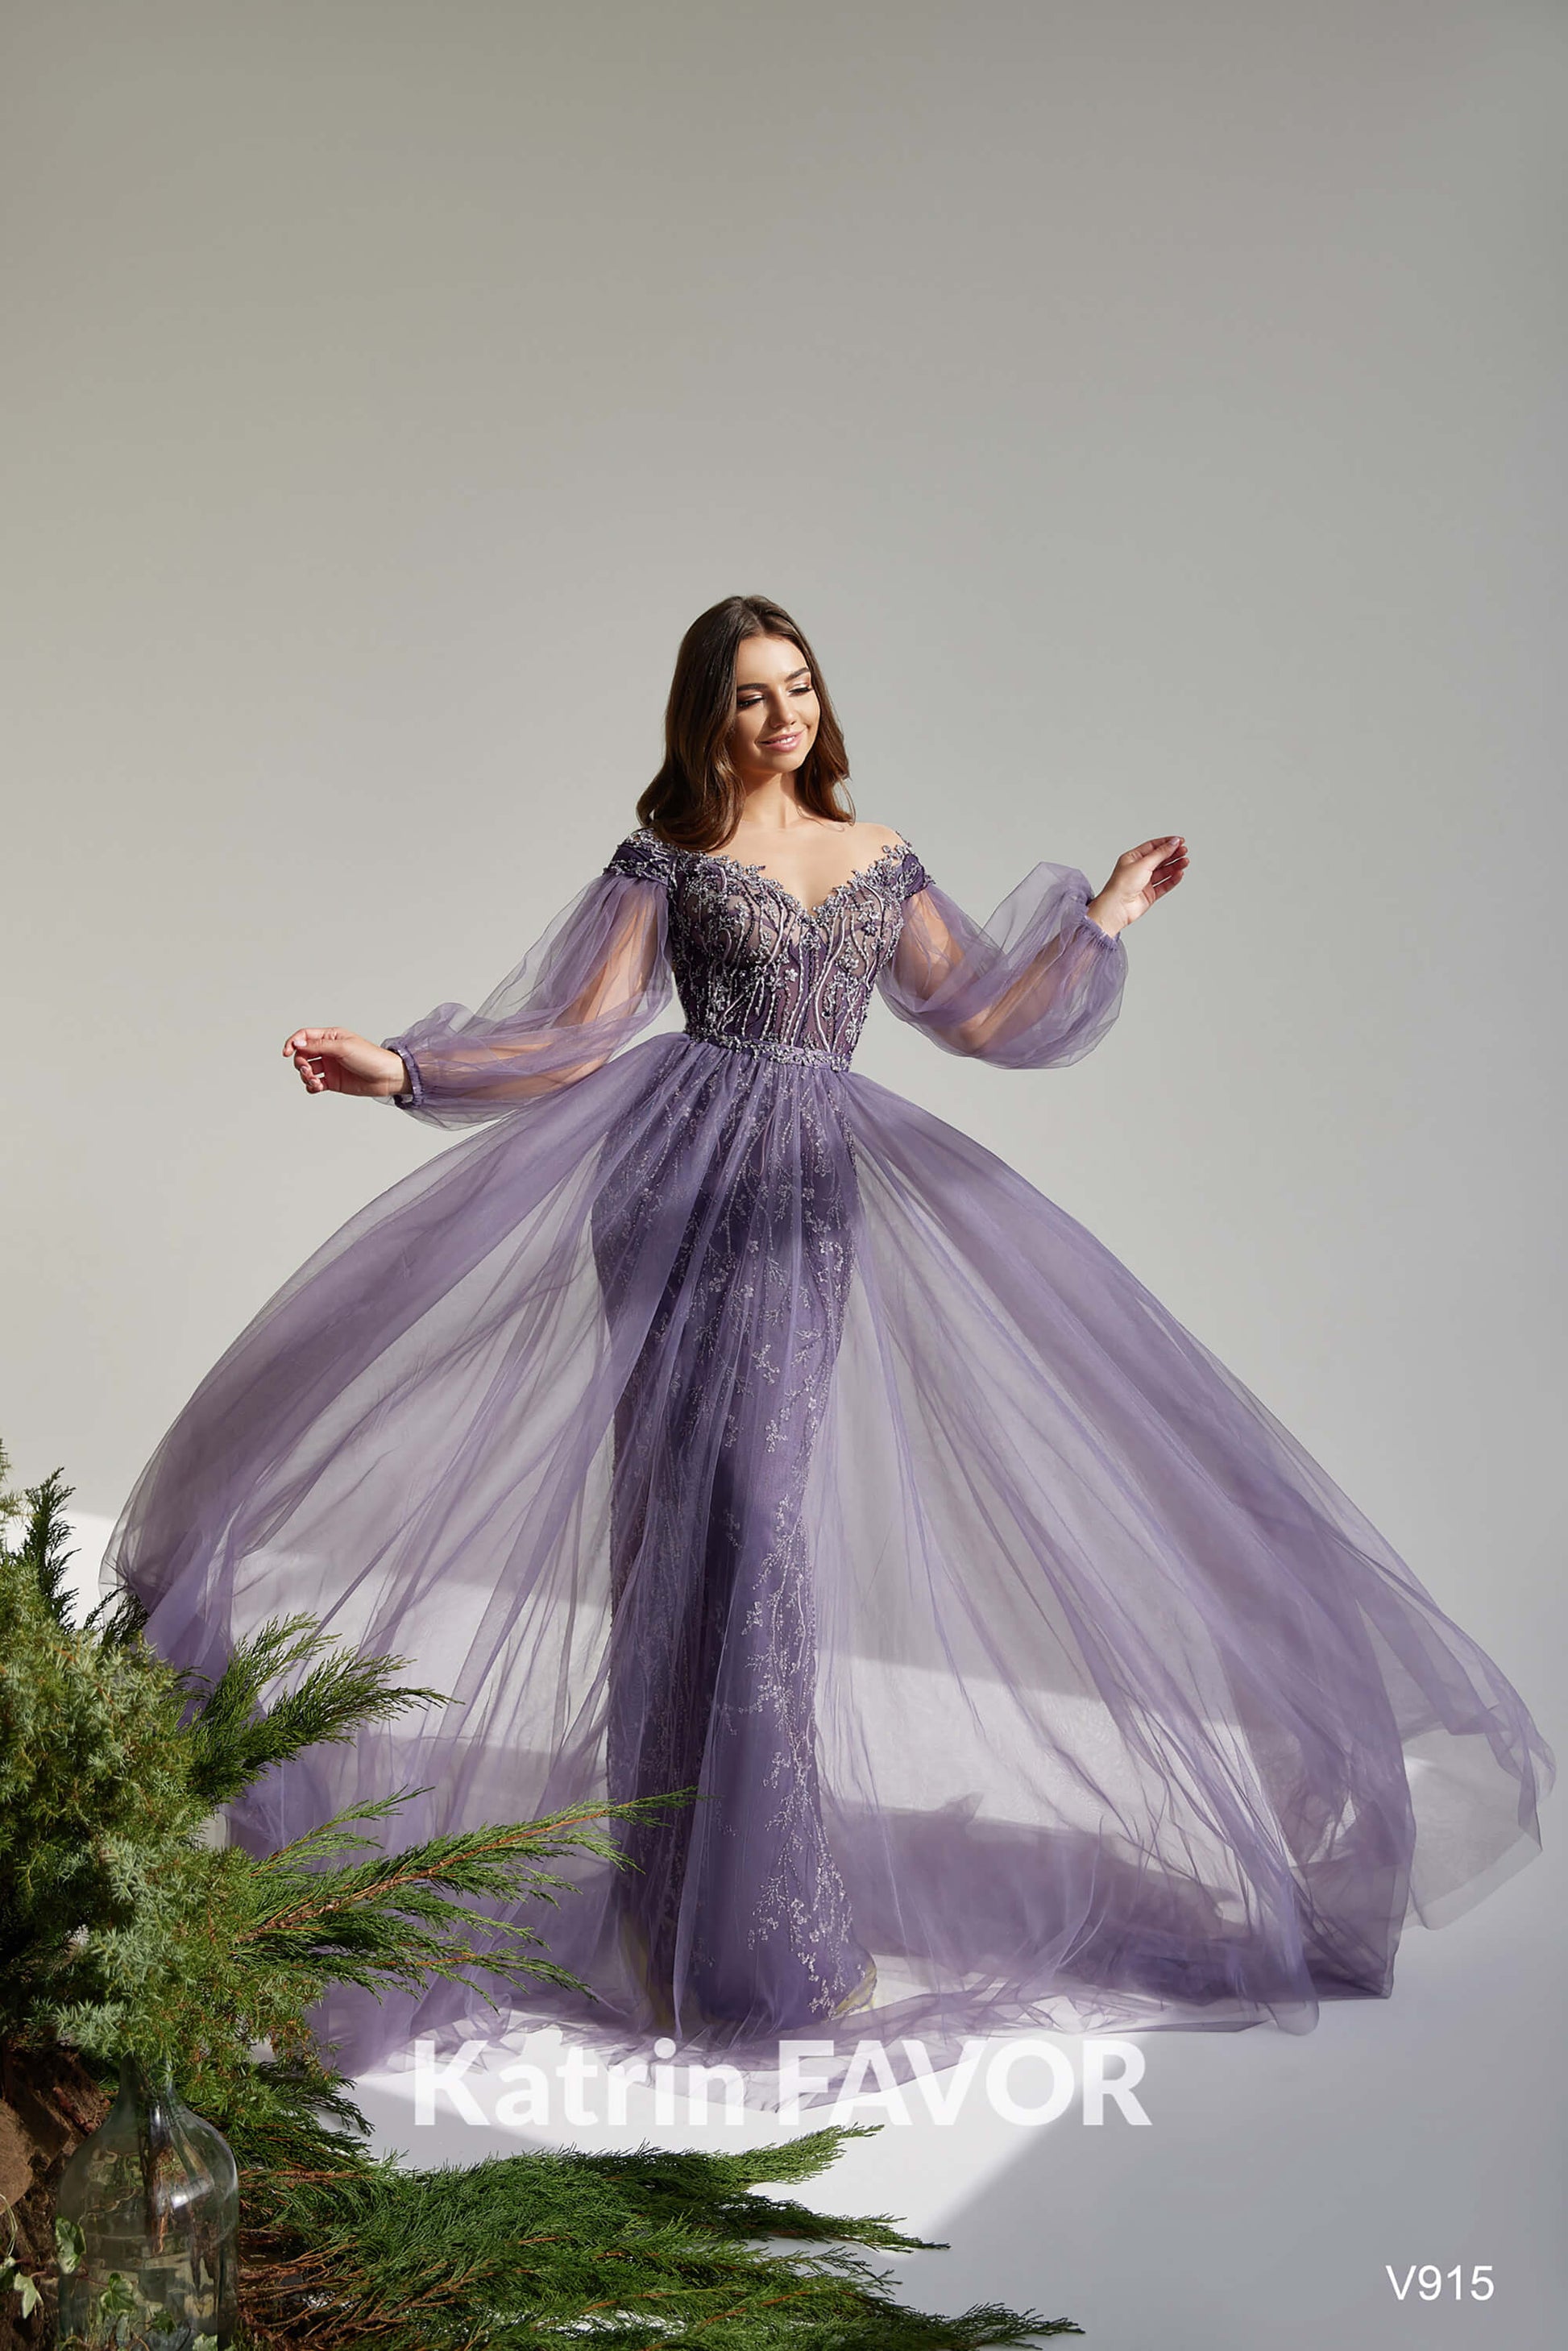 Fairy colorful alternative wedding dress